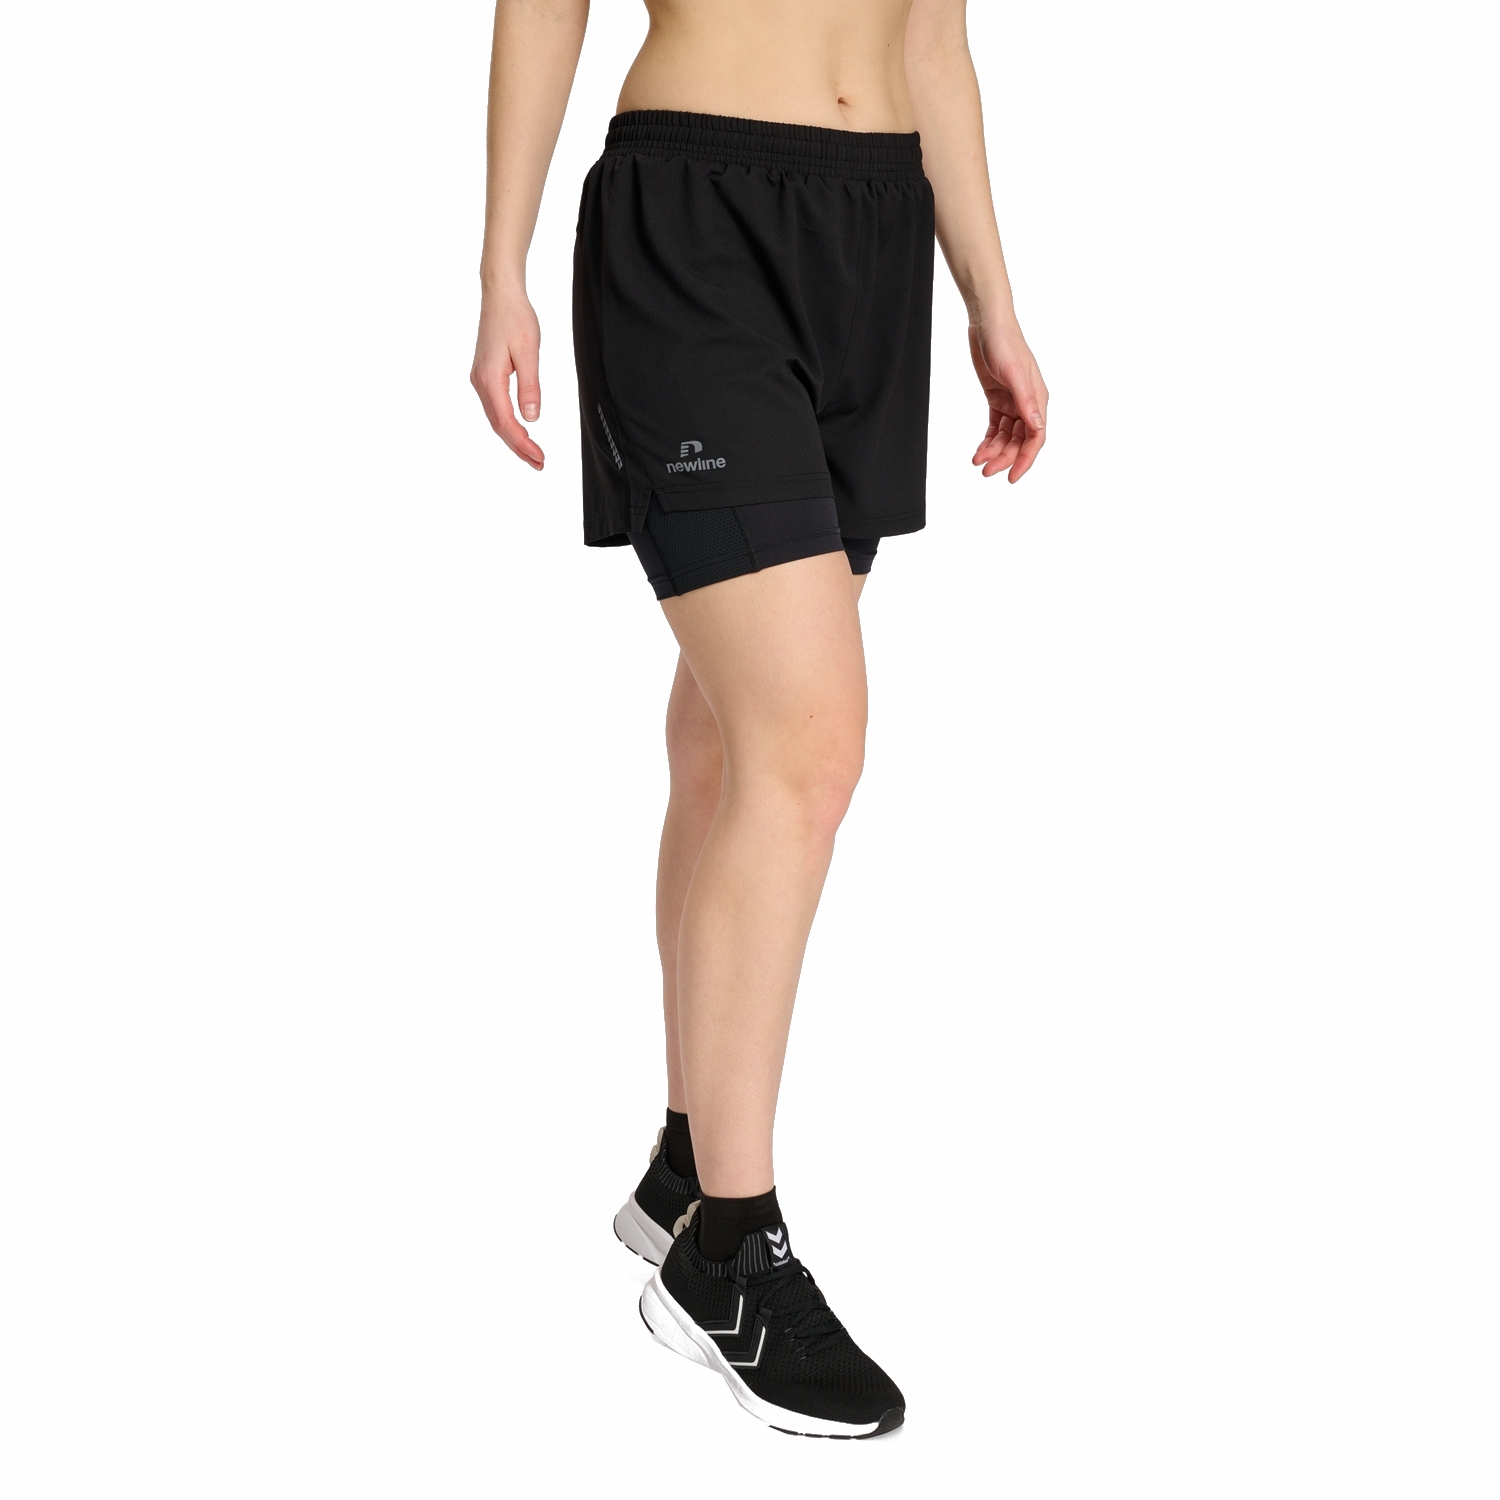 Productfoto van Newline Dallas 2in1 Dames Shorts - zwart